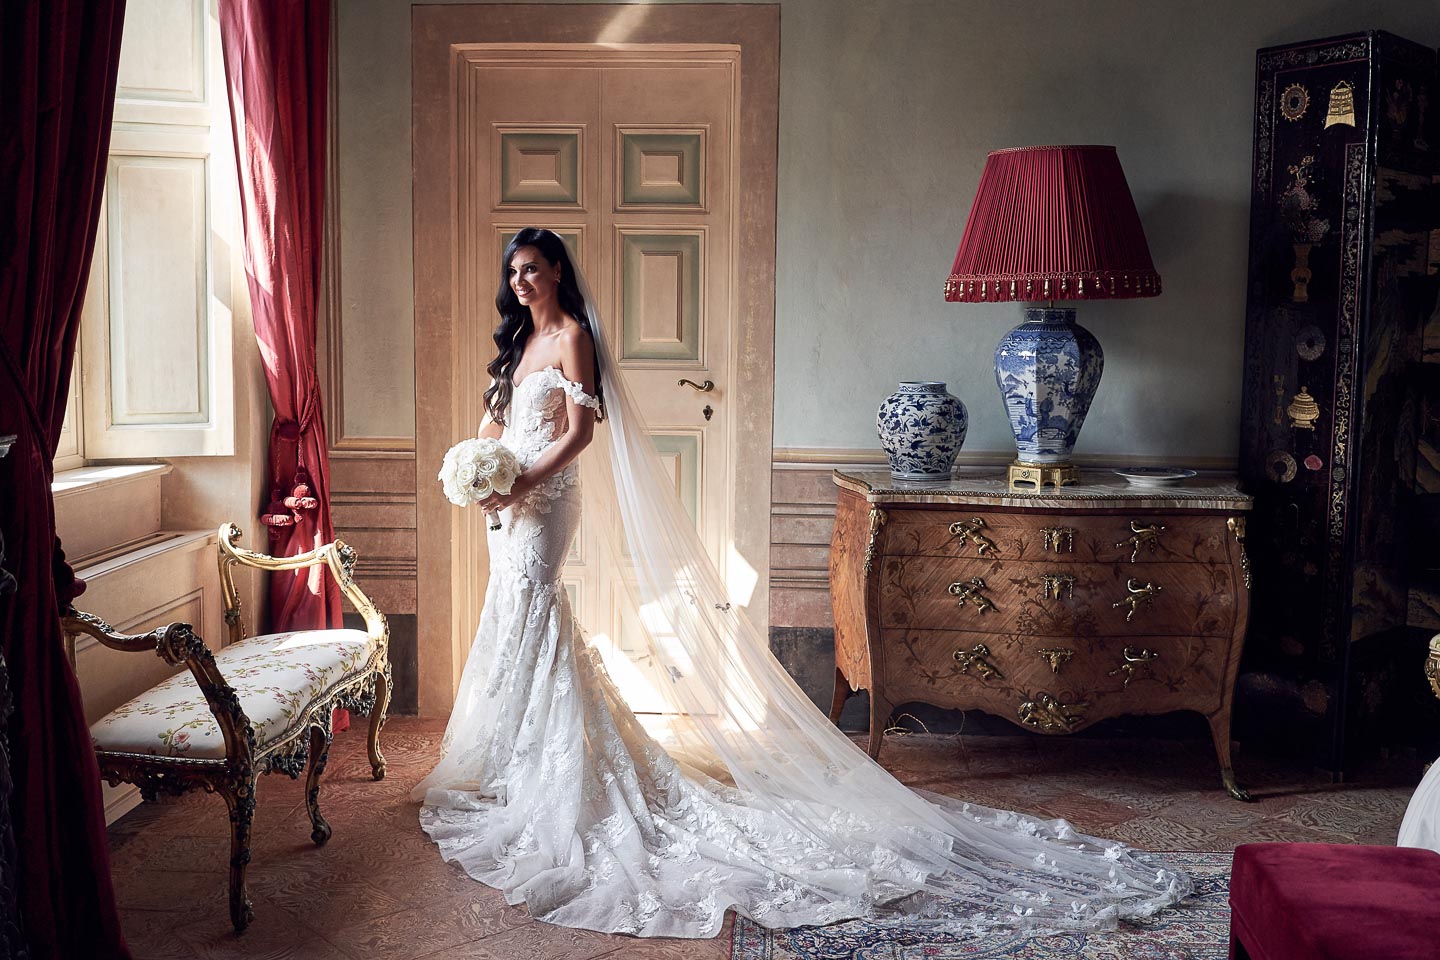 villa balbiano luxurious wedding venue dream wedding brides portrait